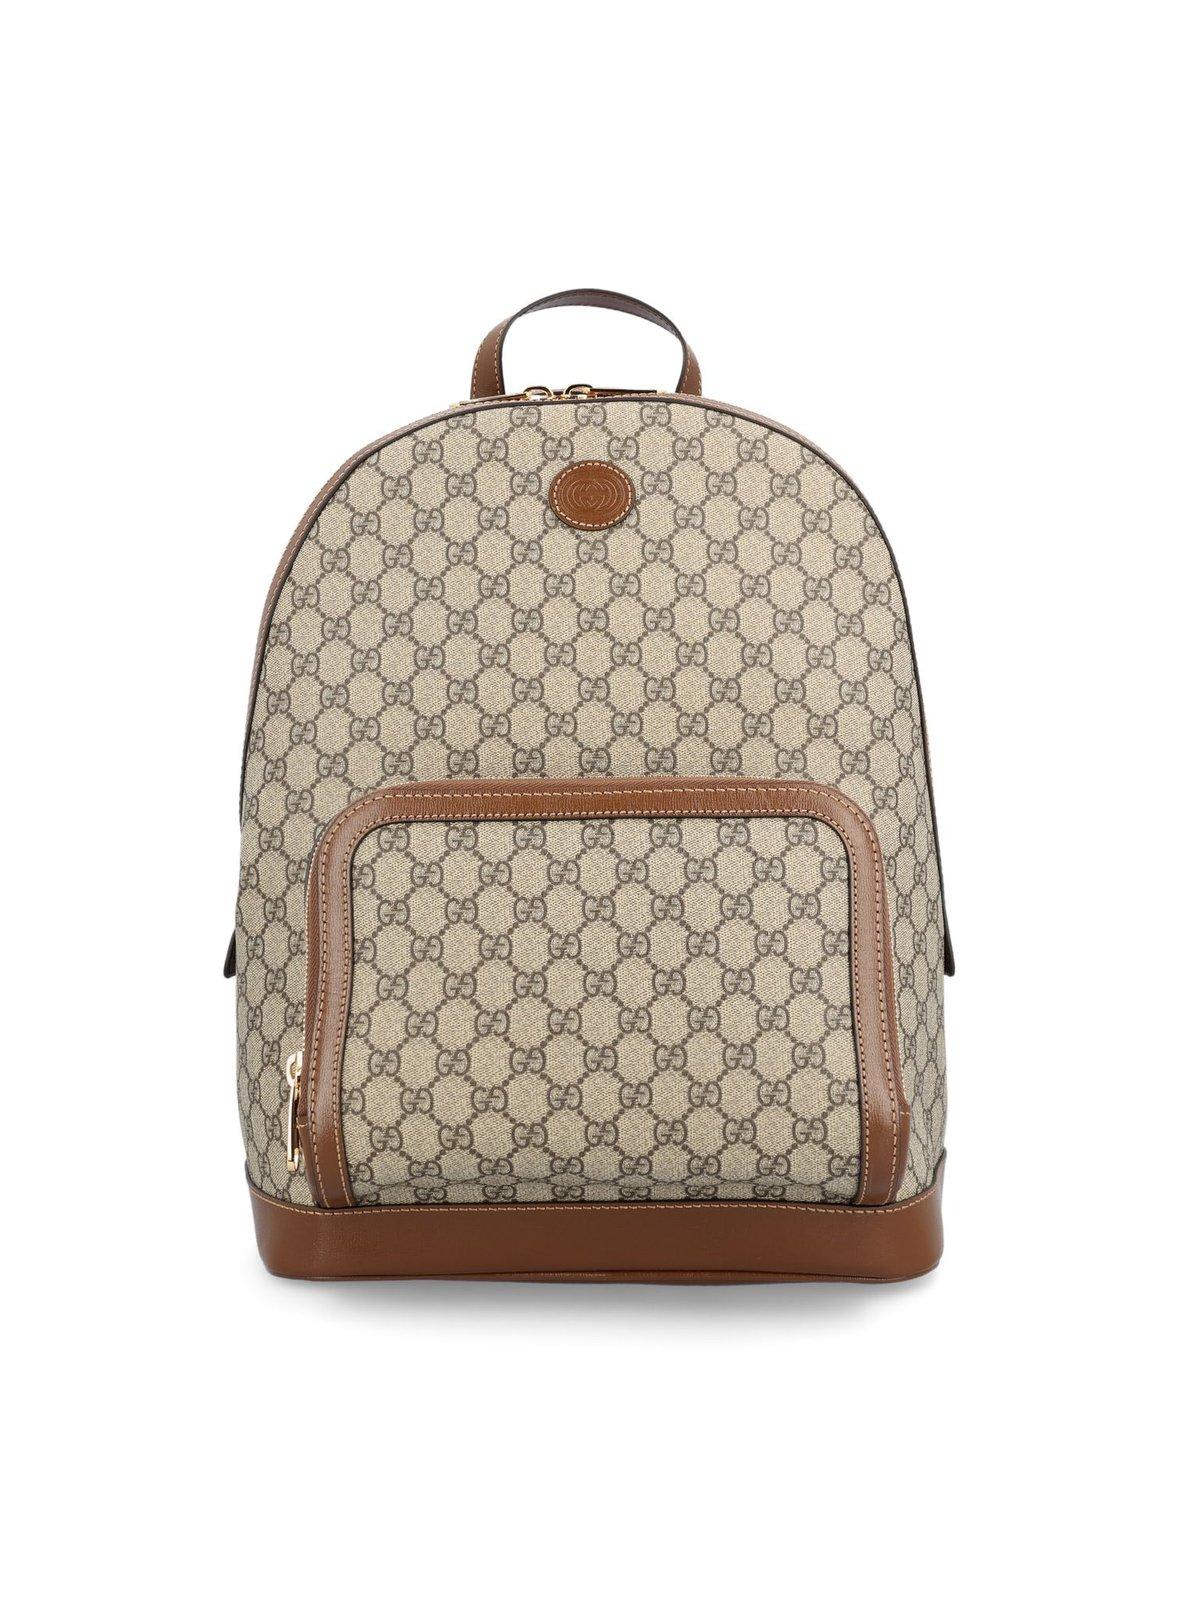 Gucci Gg Supreme Backpack In Beige